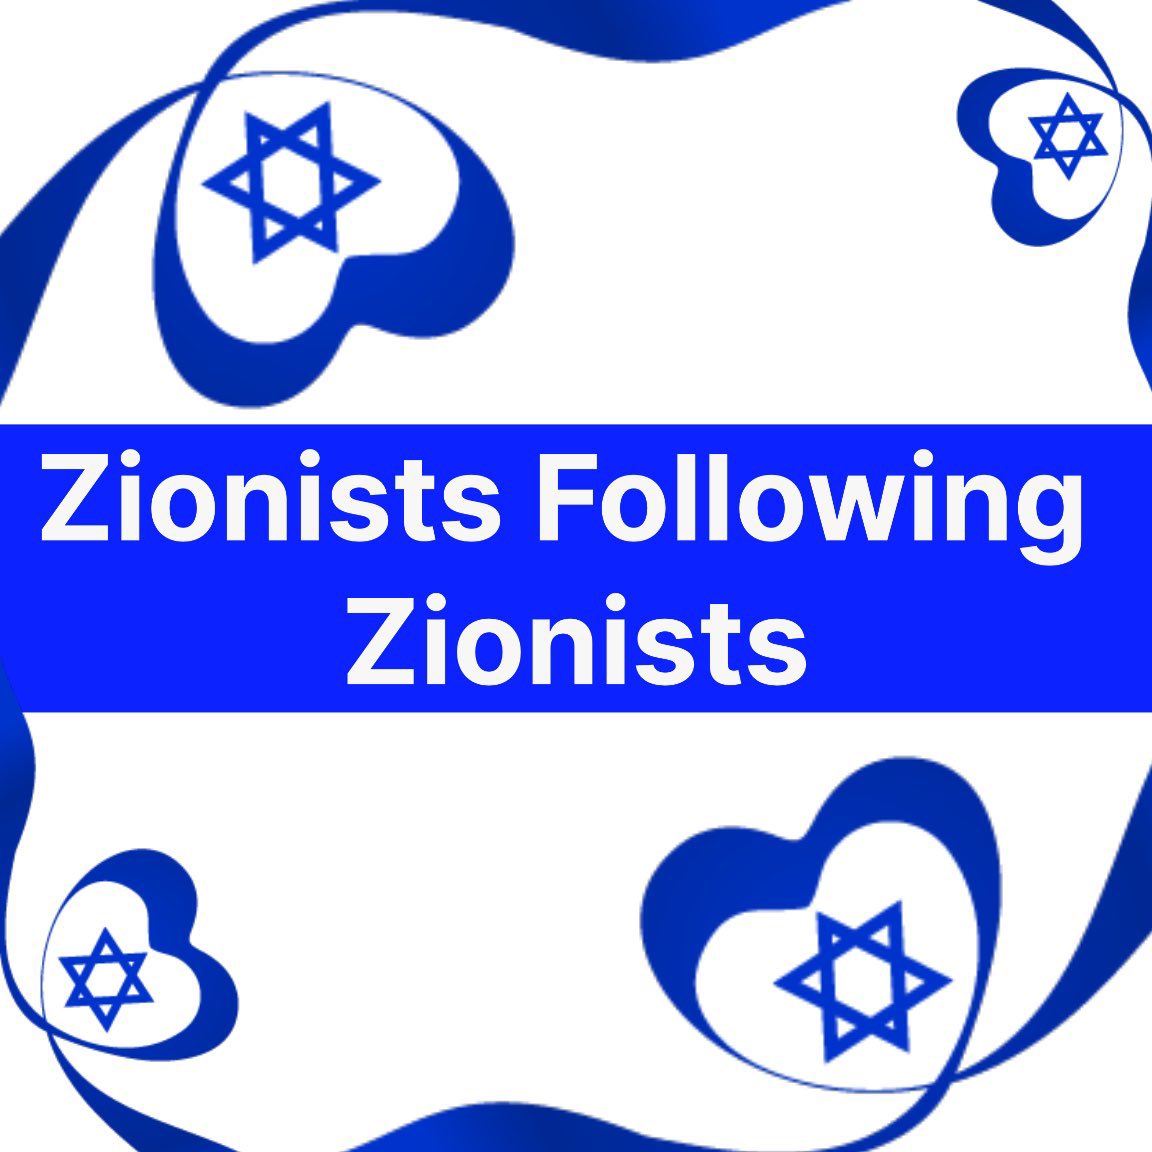 Boost #70 pro-Israel accounts under 1K. #ZionistsFollowZionists #StrongerTogether @Sal_Baro @KiritDawda @Natalia77065471 @ITrefois @Tradwife2222 @AlexNotCanceled @sportsguyshows @TJBERKO18 @AlexAmselem @akcarrington